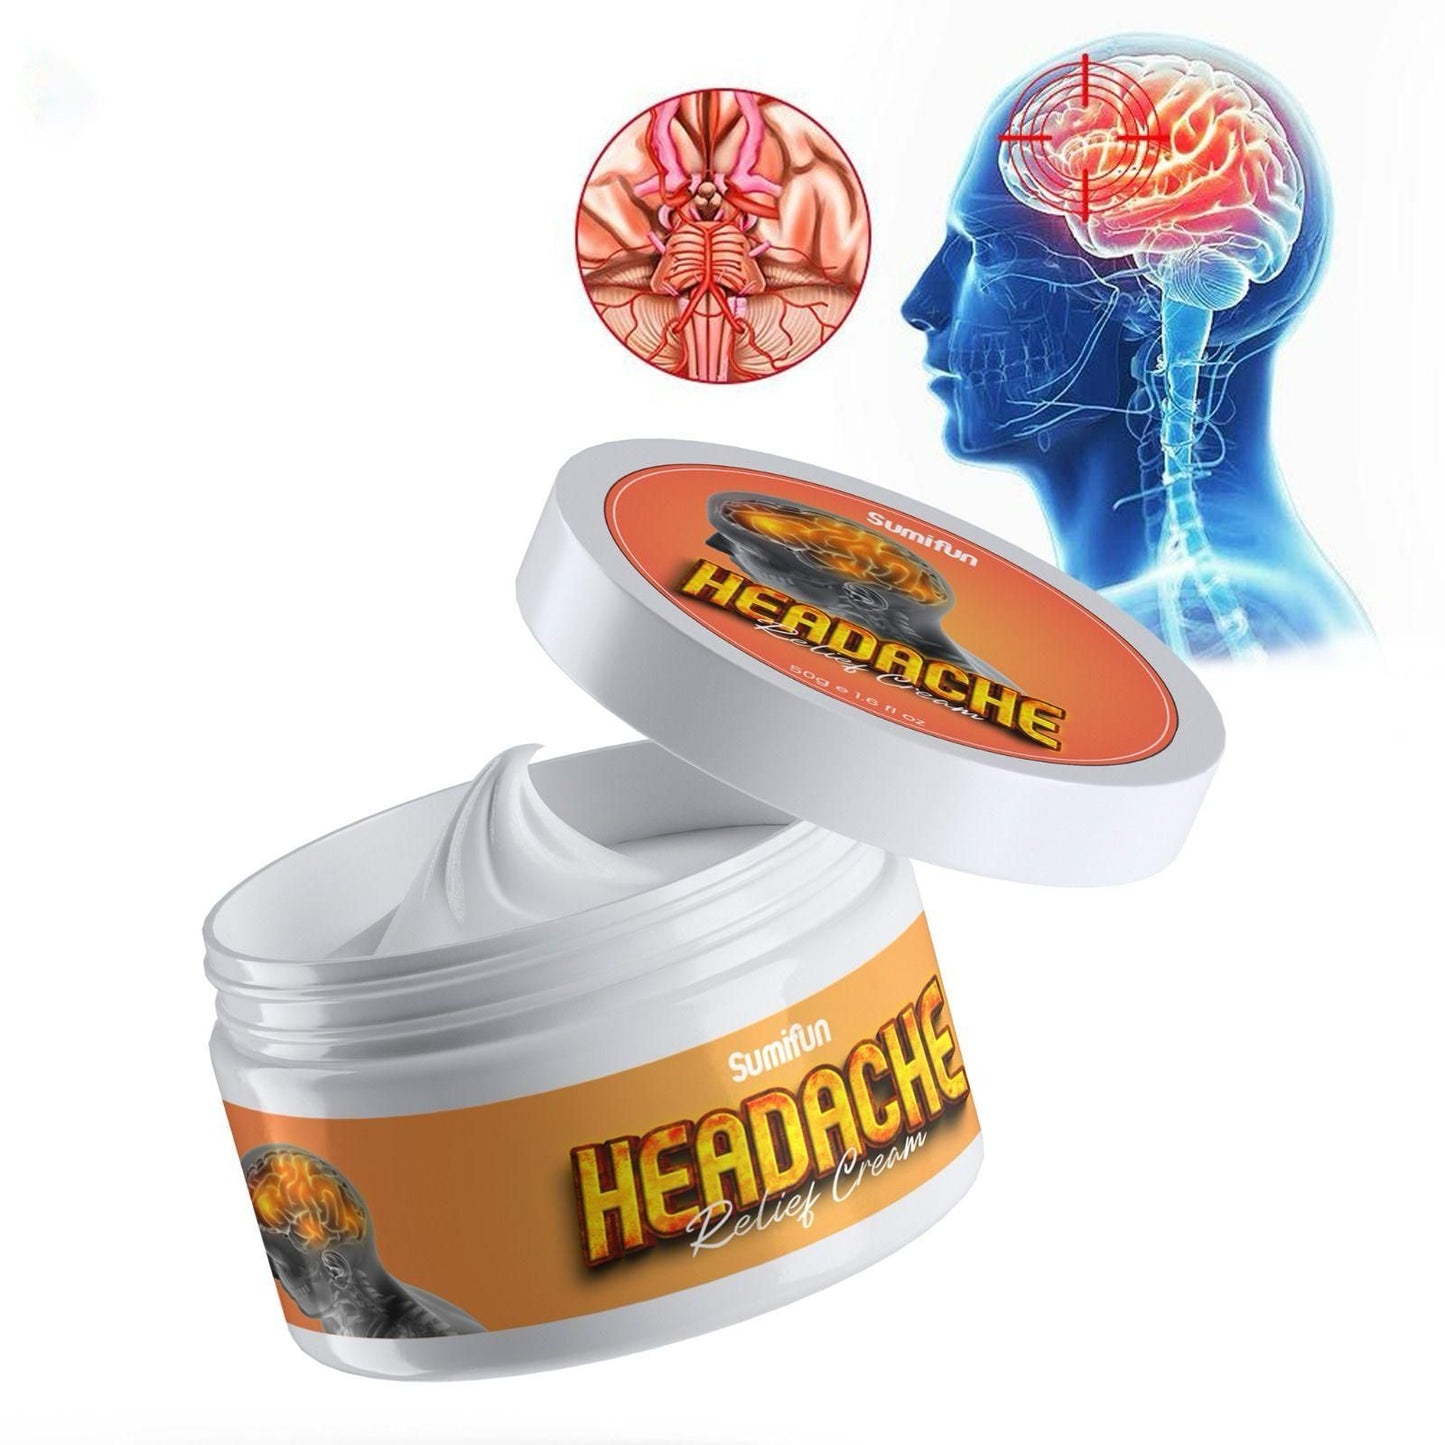 Sumifun Headache Relief Cream 50gm (Pack of 2)